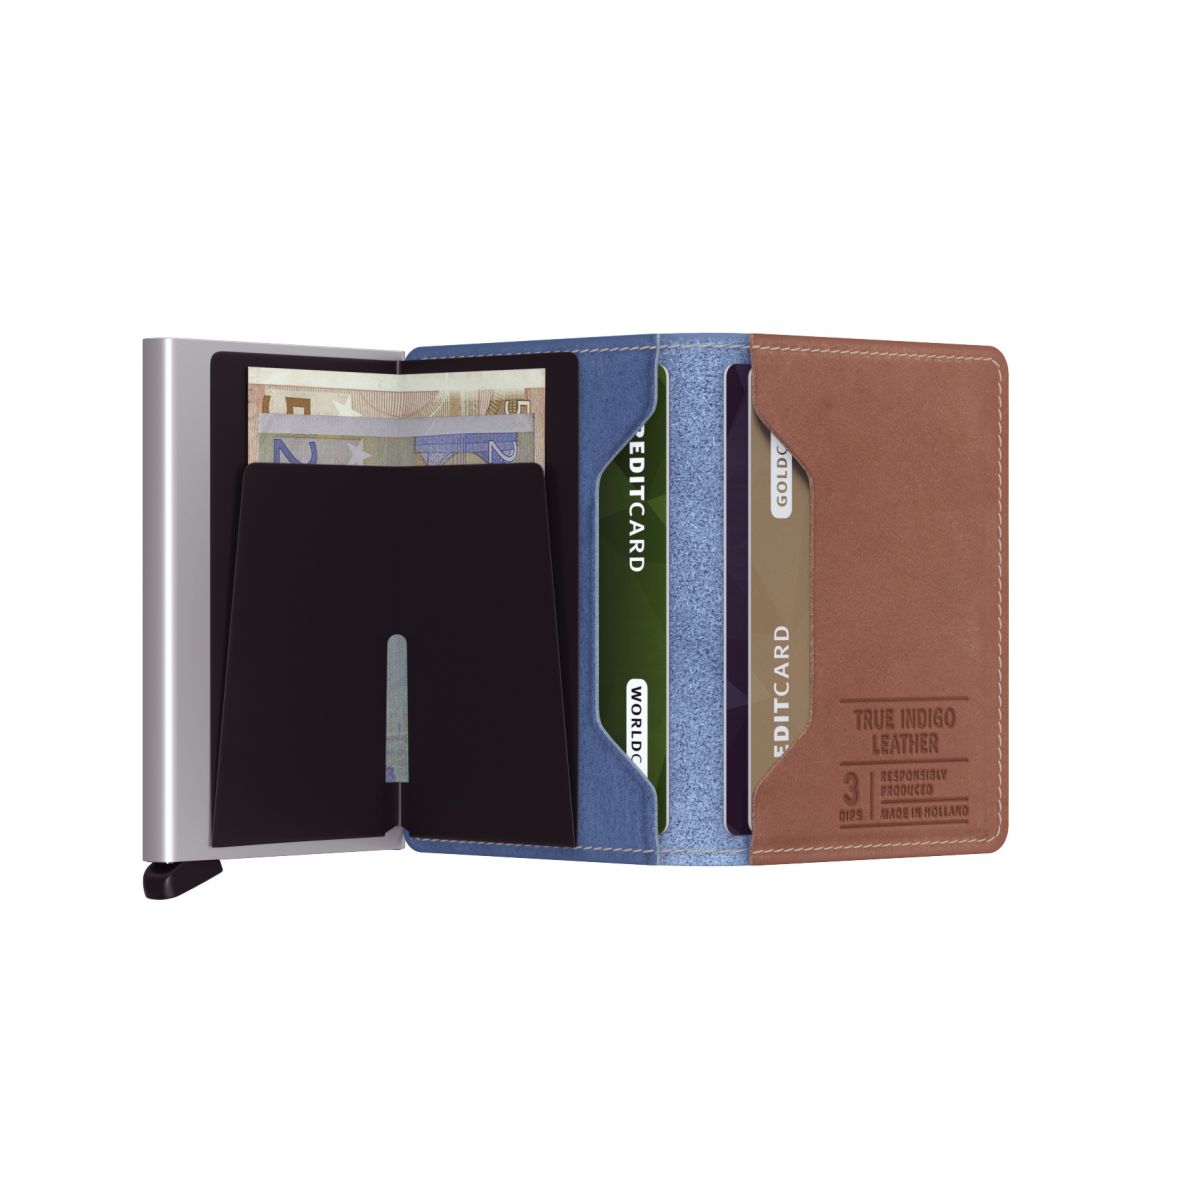 Secrid slim wallet leather Indigo 3 - S-Indigo-3 - 53,68€